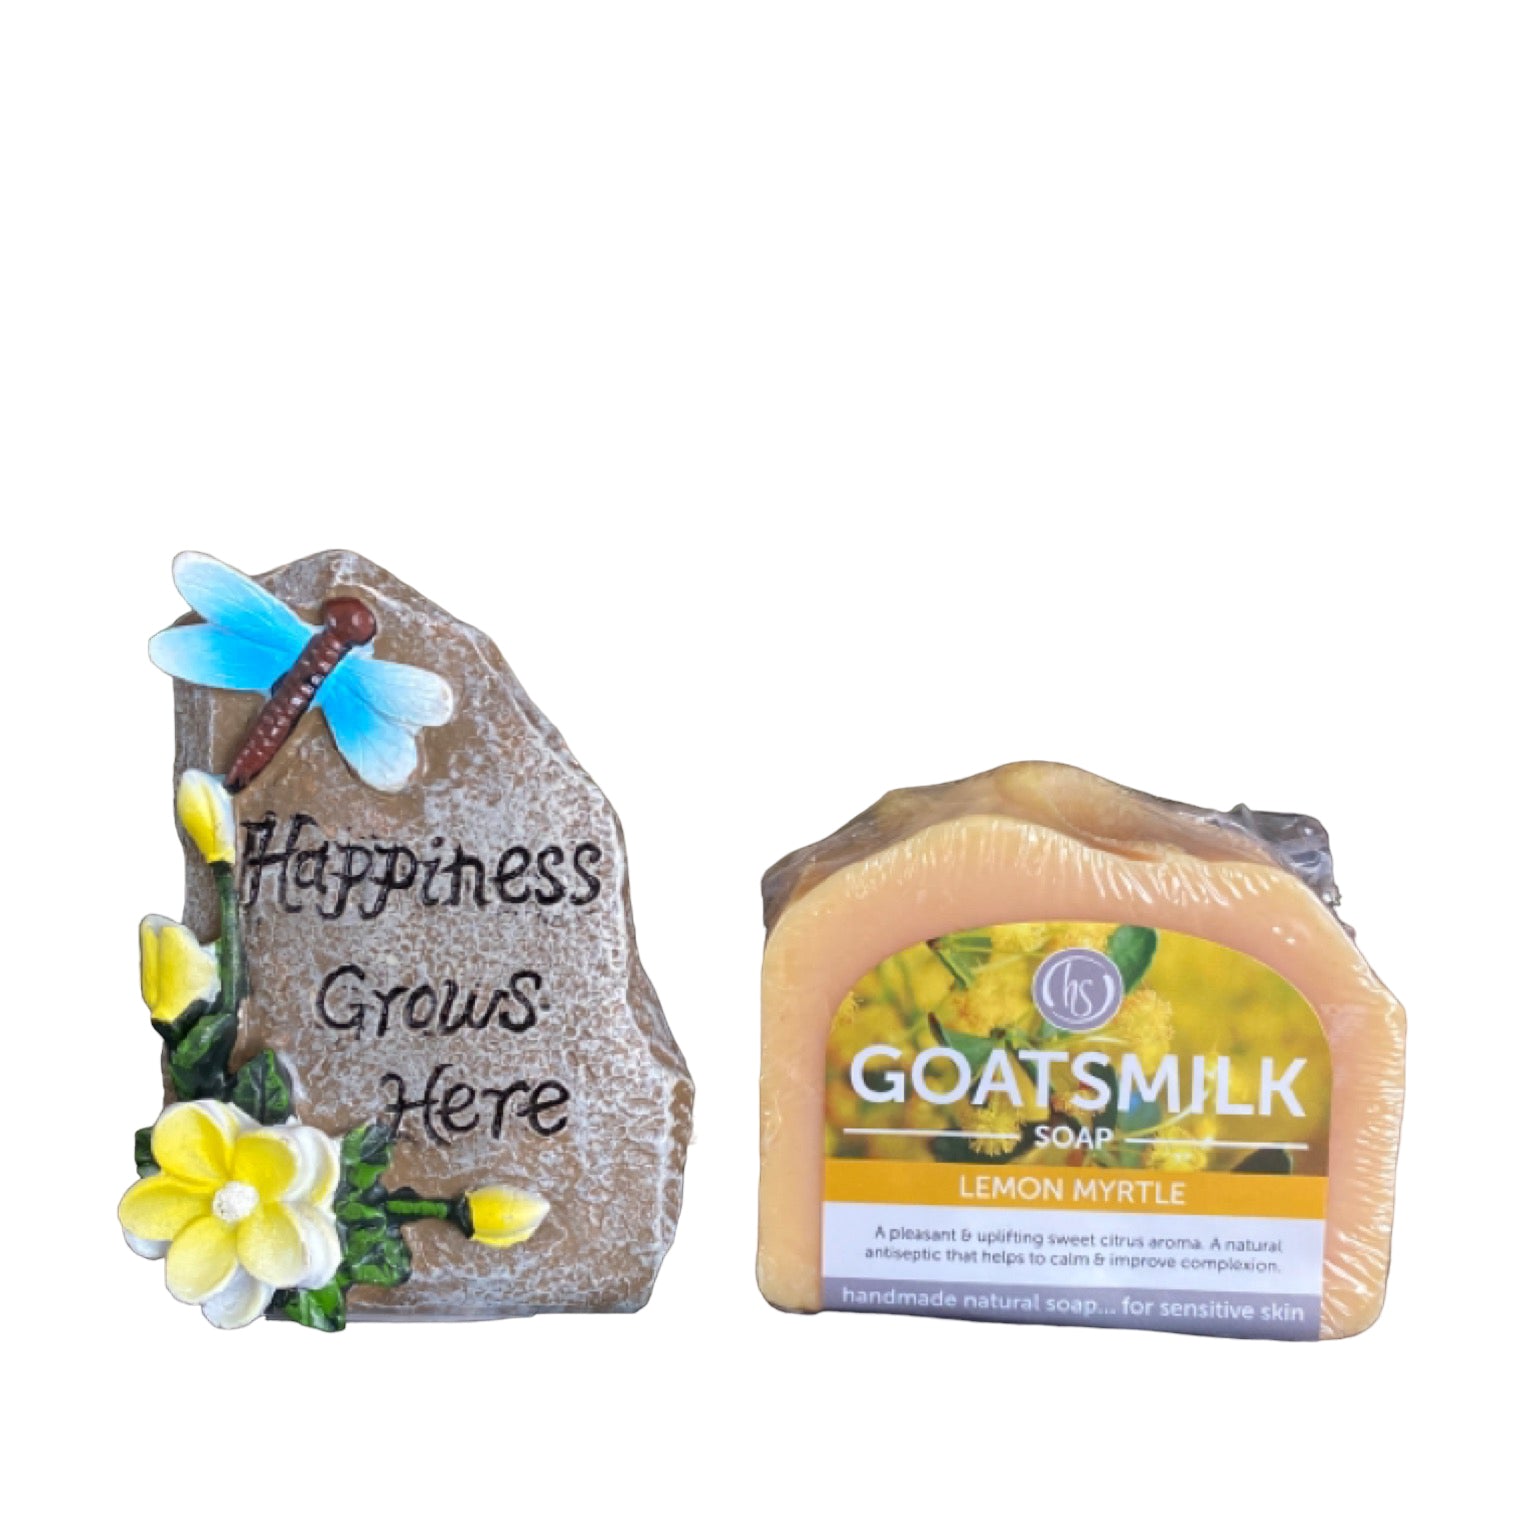 Garden Happiness Gardener Stone Goatmilk Soap Gift - The Renmy Store Homewares & Gifts 